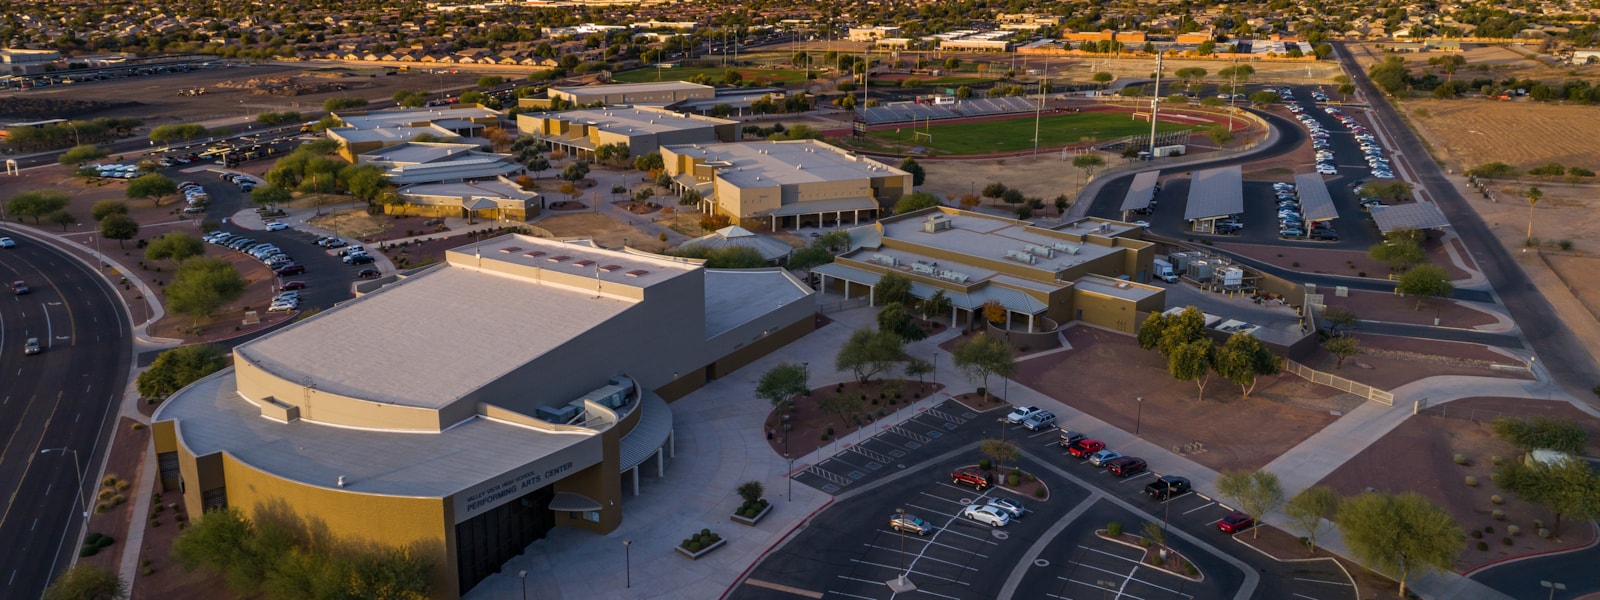 Aerial view of Valley Vista High School